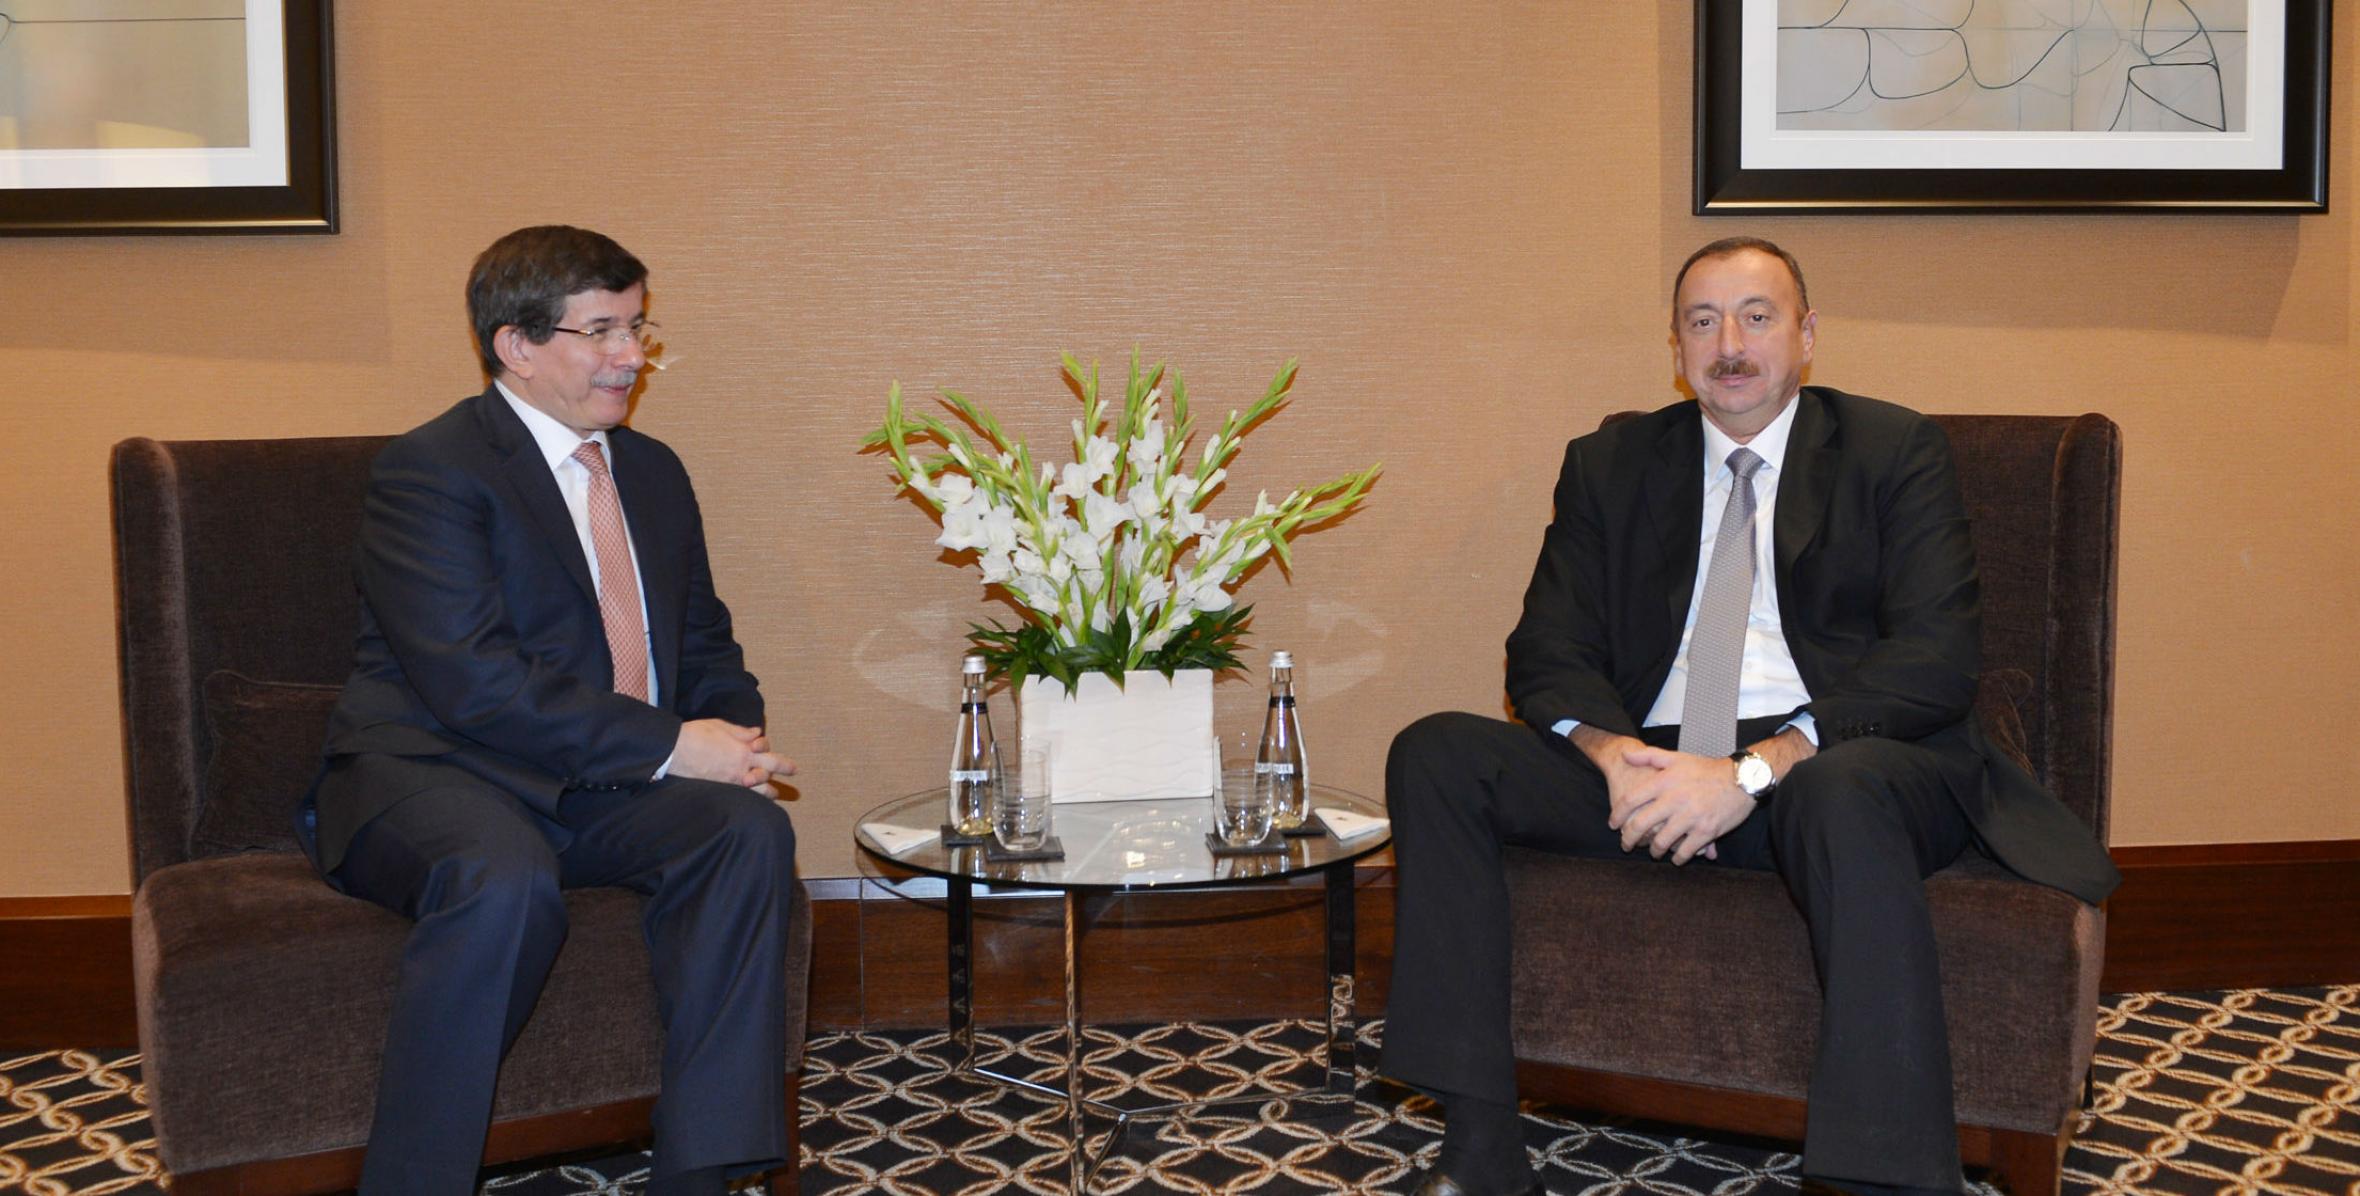 Ilham Aliyev and Turkish Foreign Minister Ahmet Davutoglu had a meeting